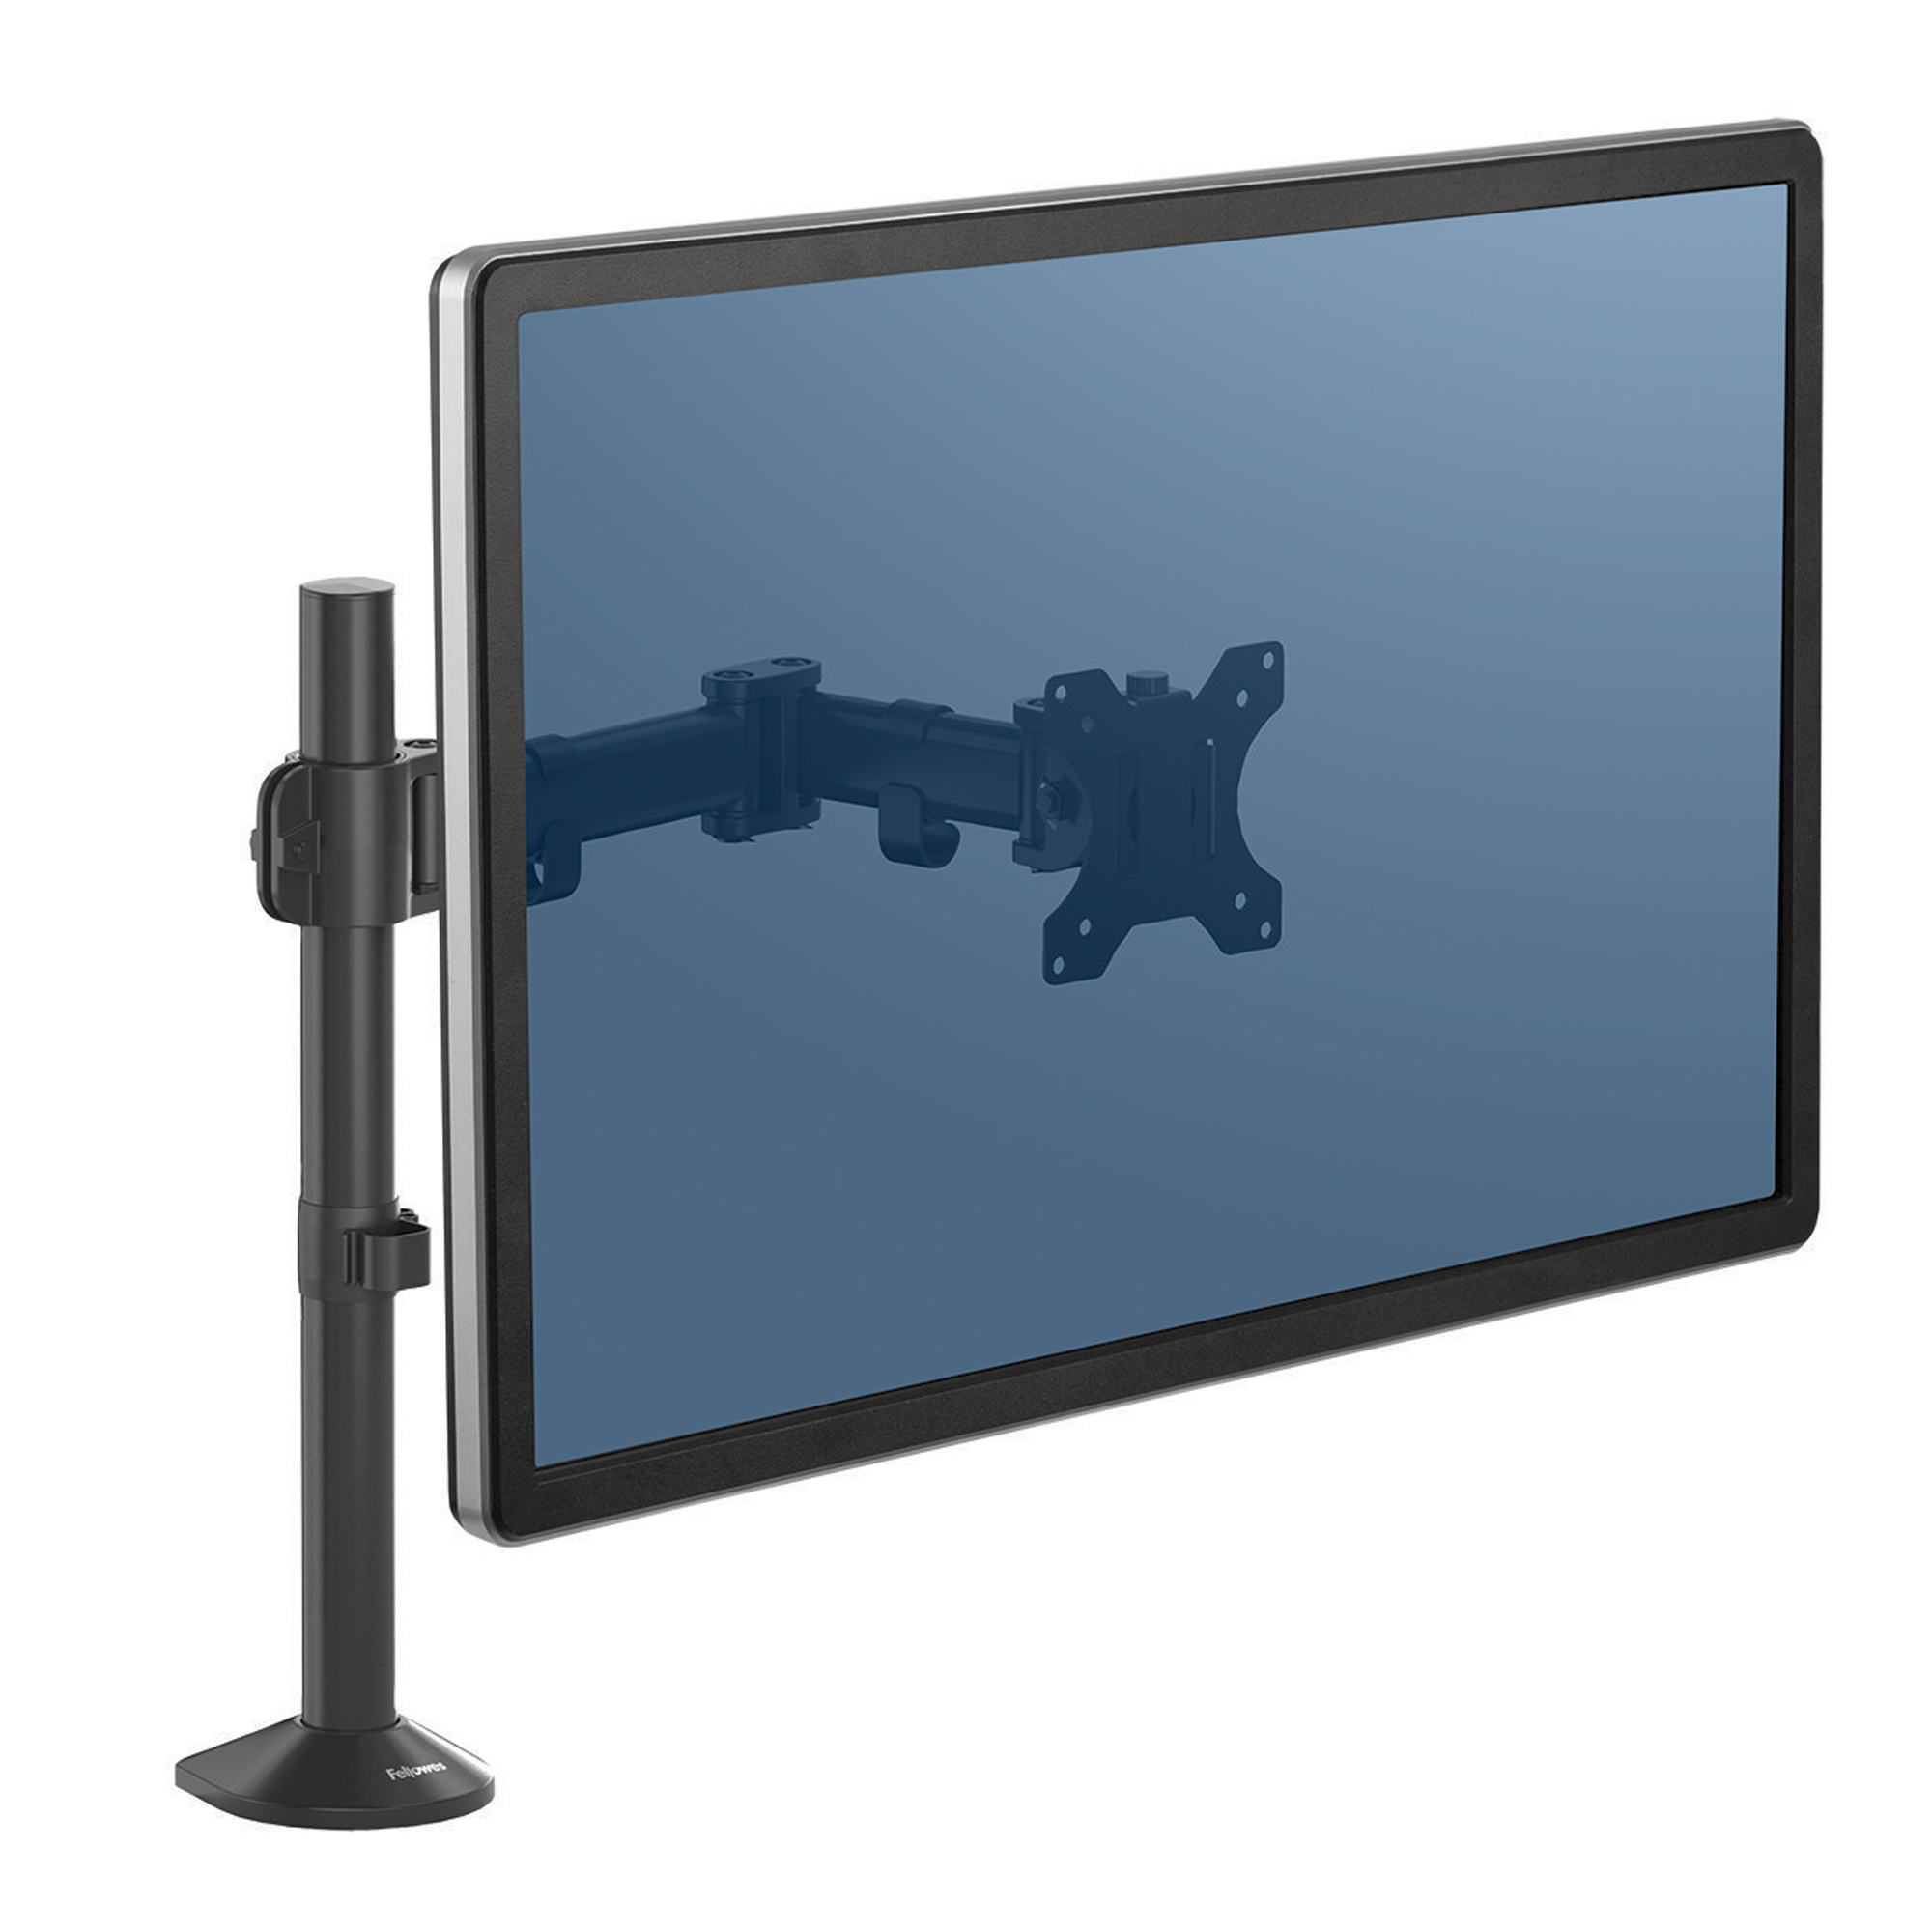 Bracci porta monitor Reflex Series - singolo - 55x11,6x49cm - Fellowes